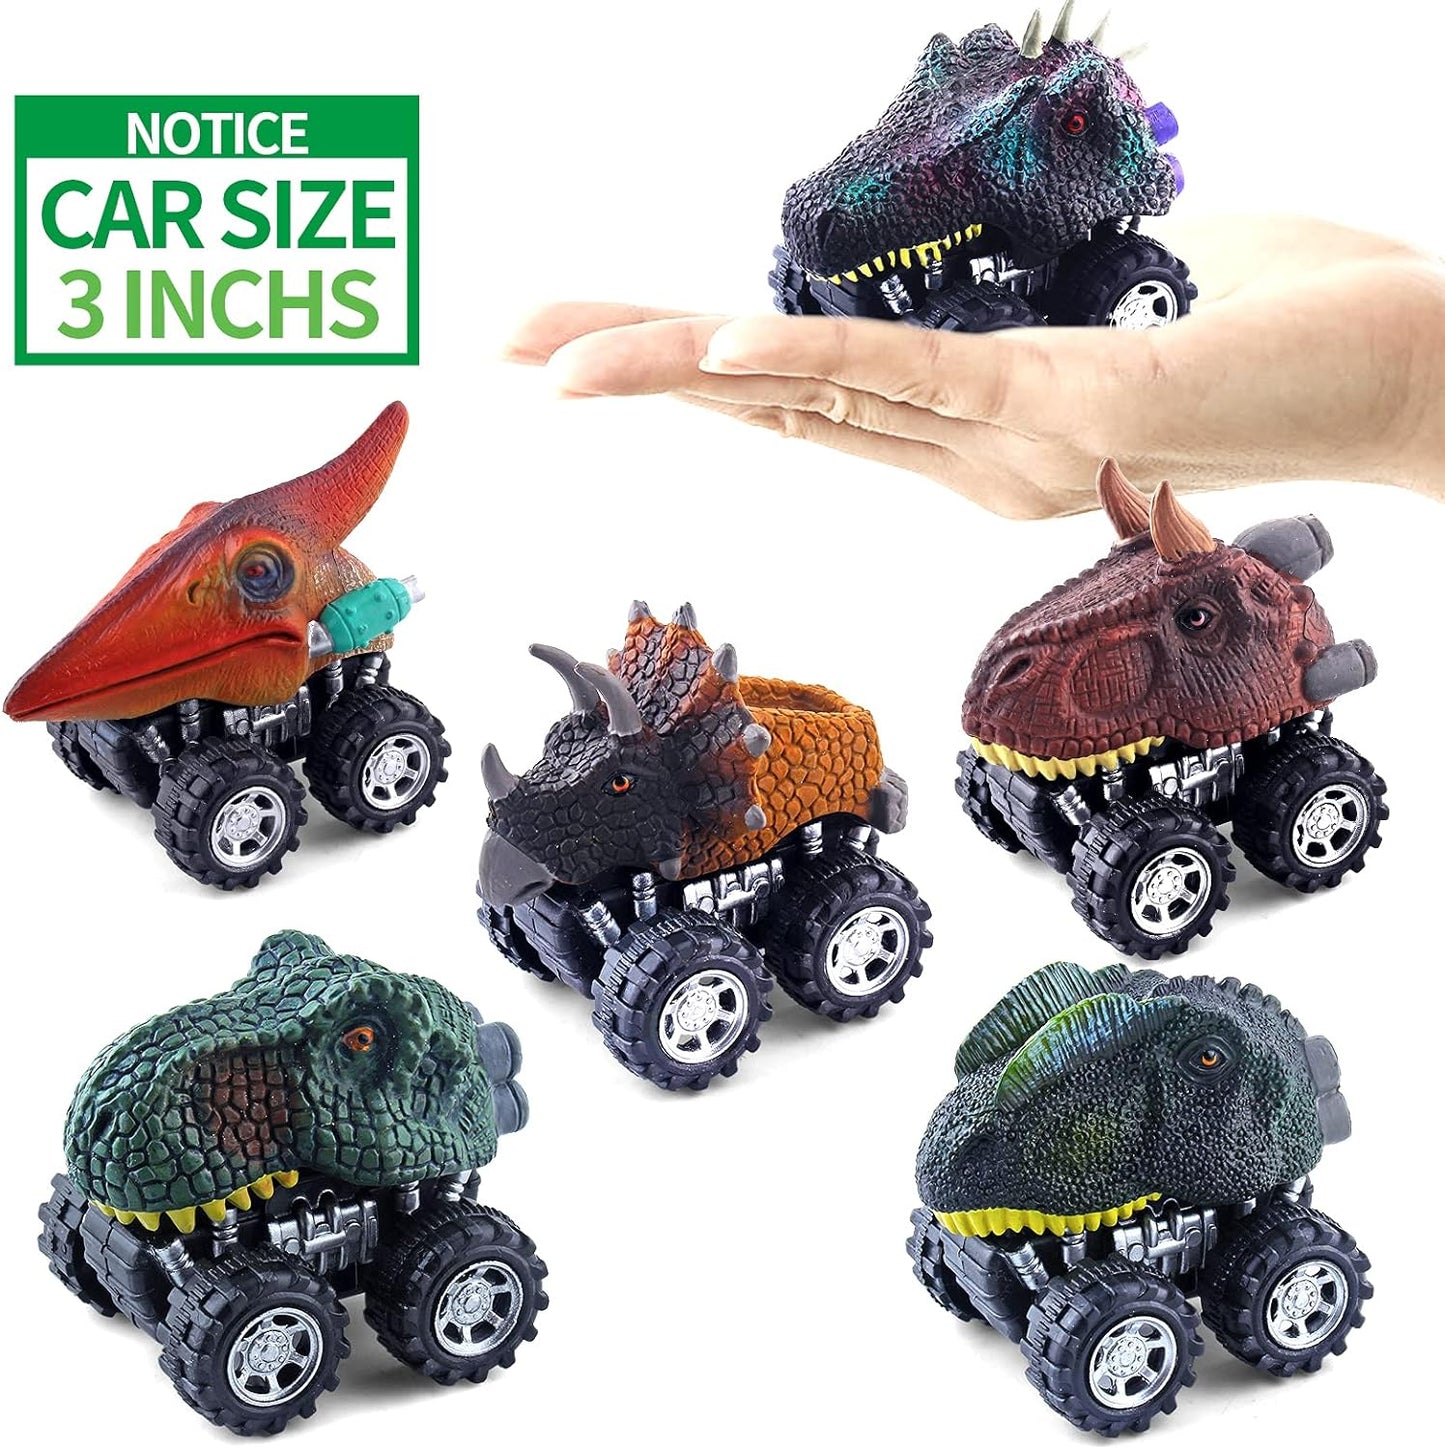 Dinosaur Toy Pull Back Cars 6 Pack Dinosaur Boy Toys Age 3,4,5,6,7 Dino T-Rex Games